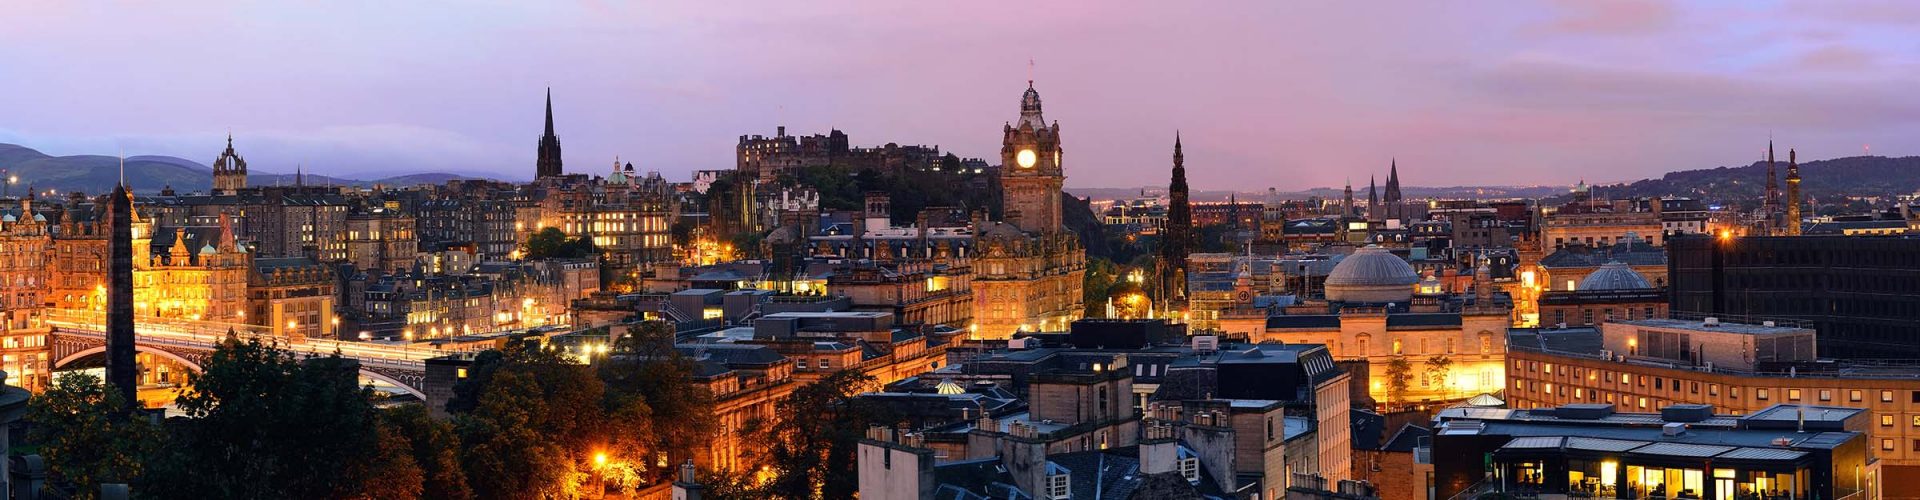 The city of Edinburgh lit up at dusk